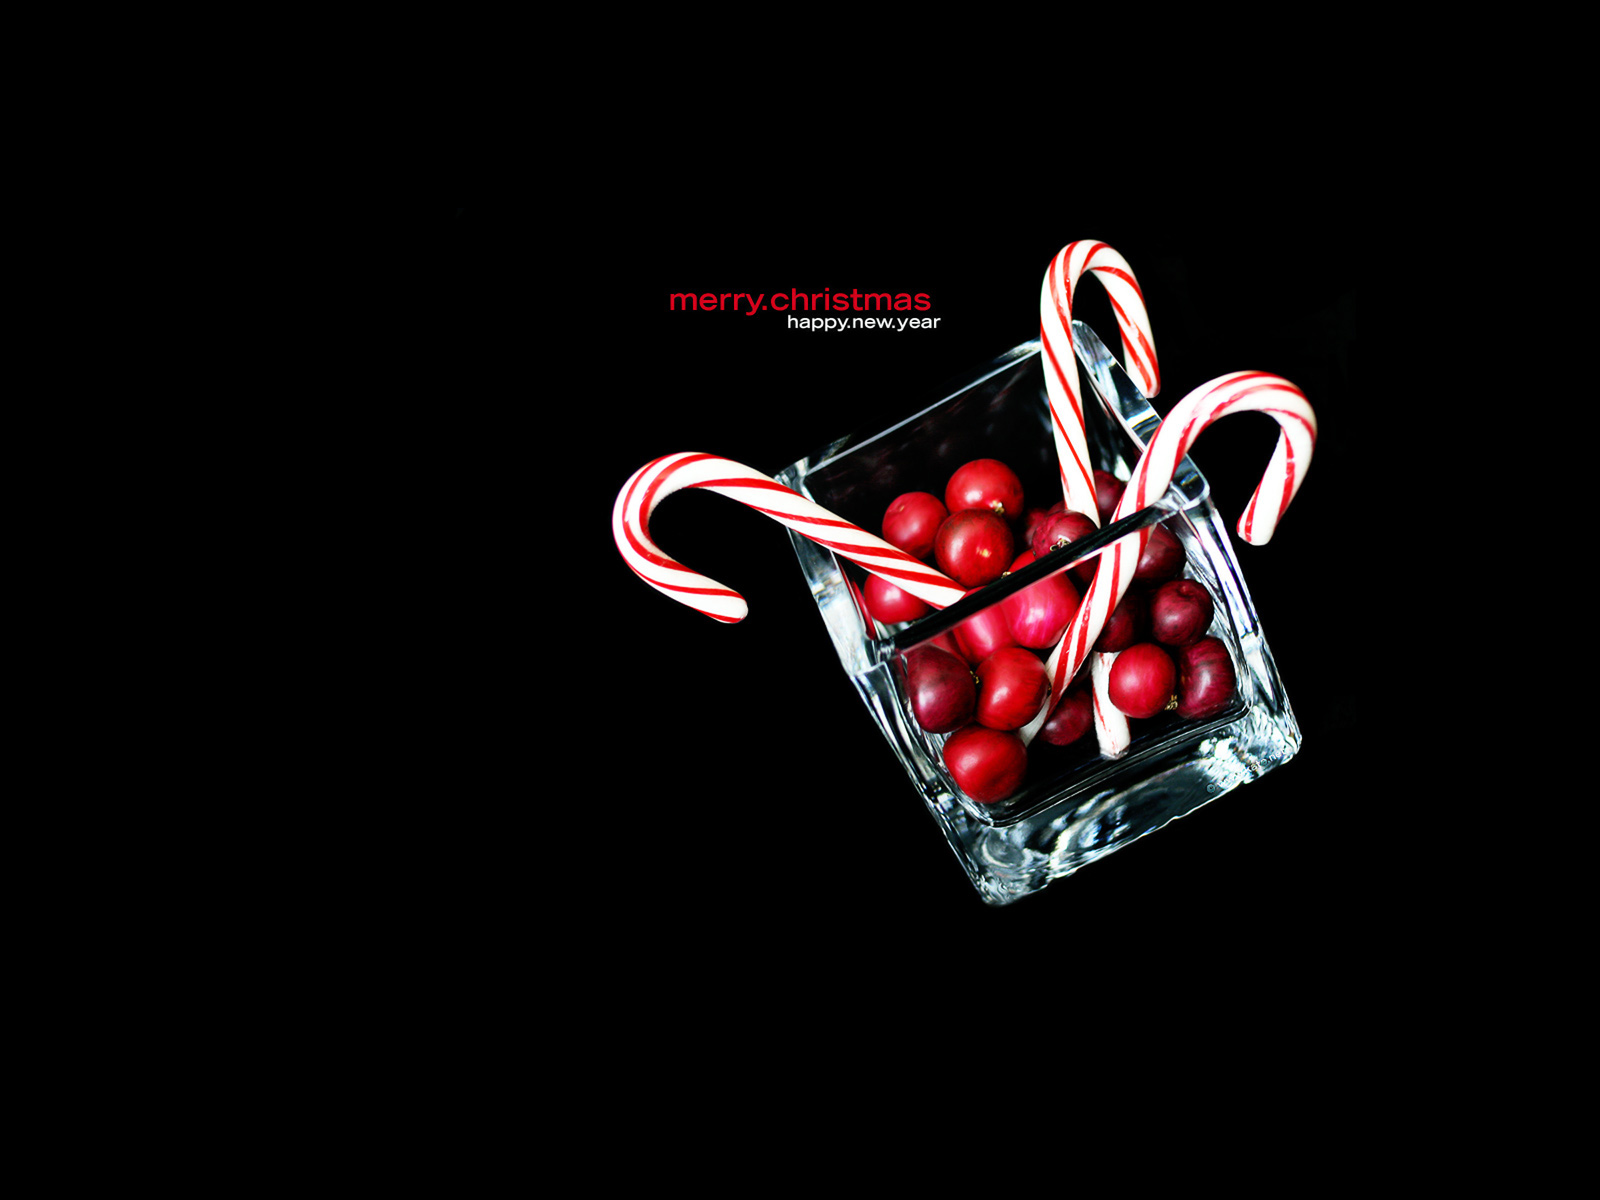 http://2.bp.blogspot.com/-J1QtaE2s9j4/T7kAHzoWJ0I/AAAAAAAAALQ/C5YALSAGVuE/s1600/Christmas+Candy+Cane+Wallpapers%5BHD%5D+%288%29.jpg